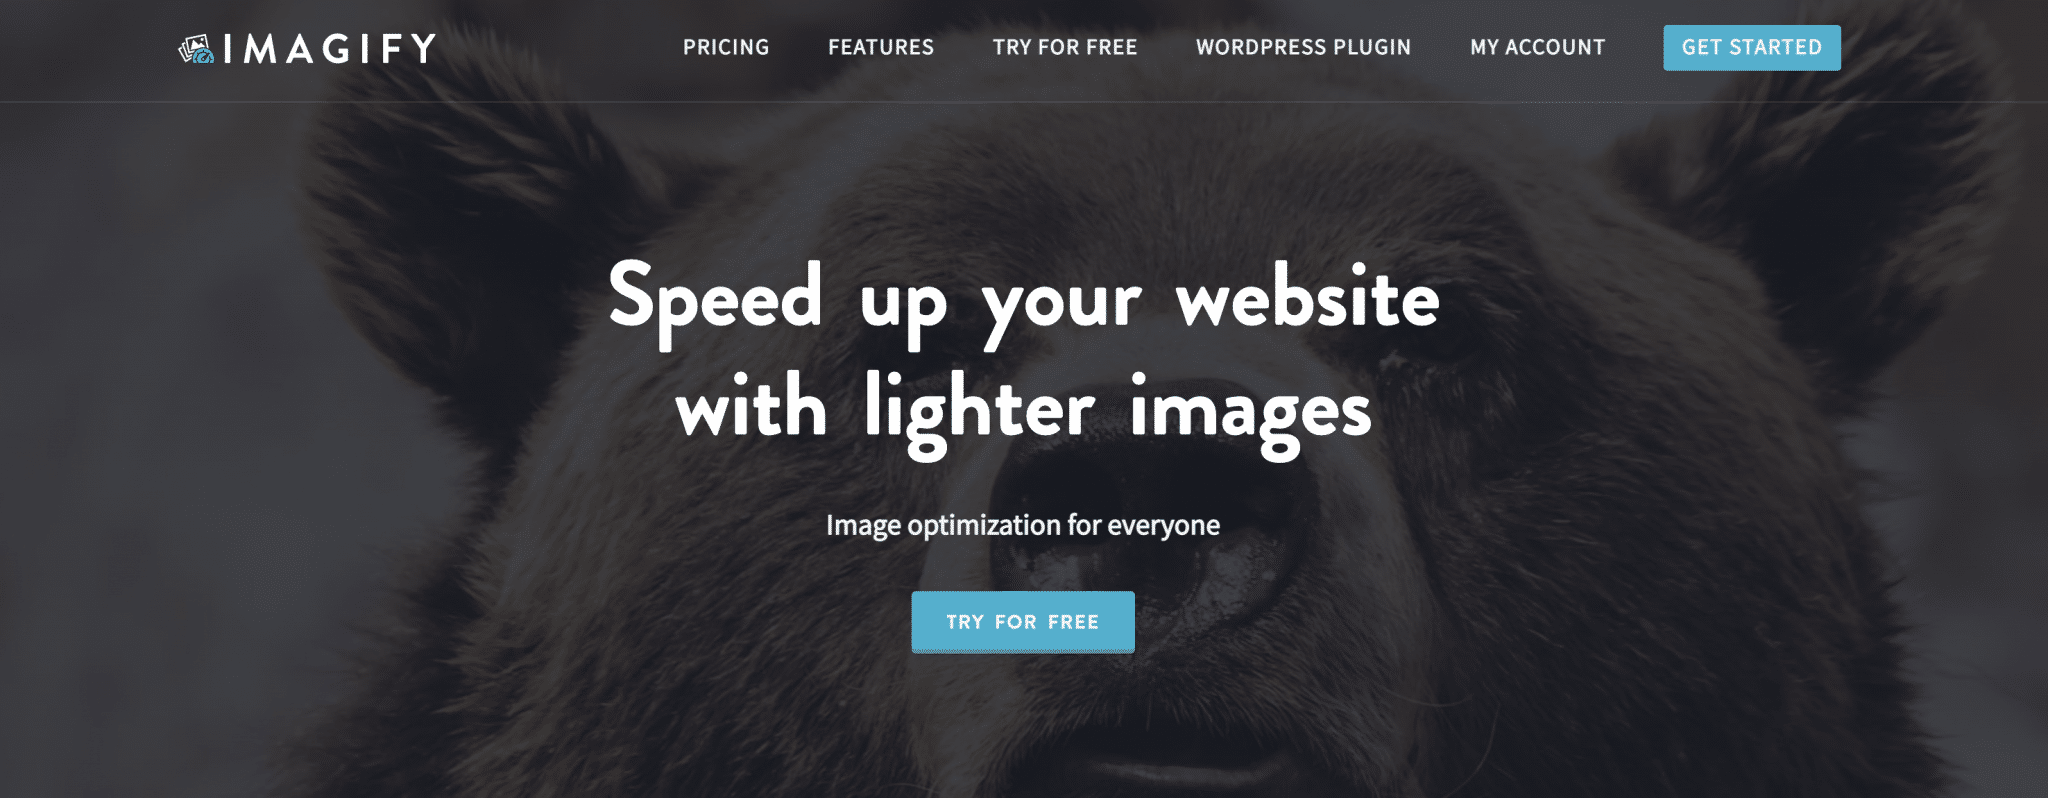 Homepage of Imagify's website